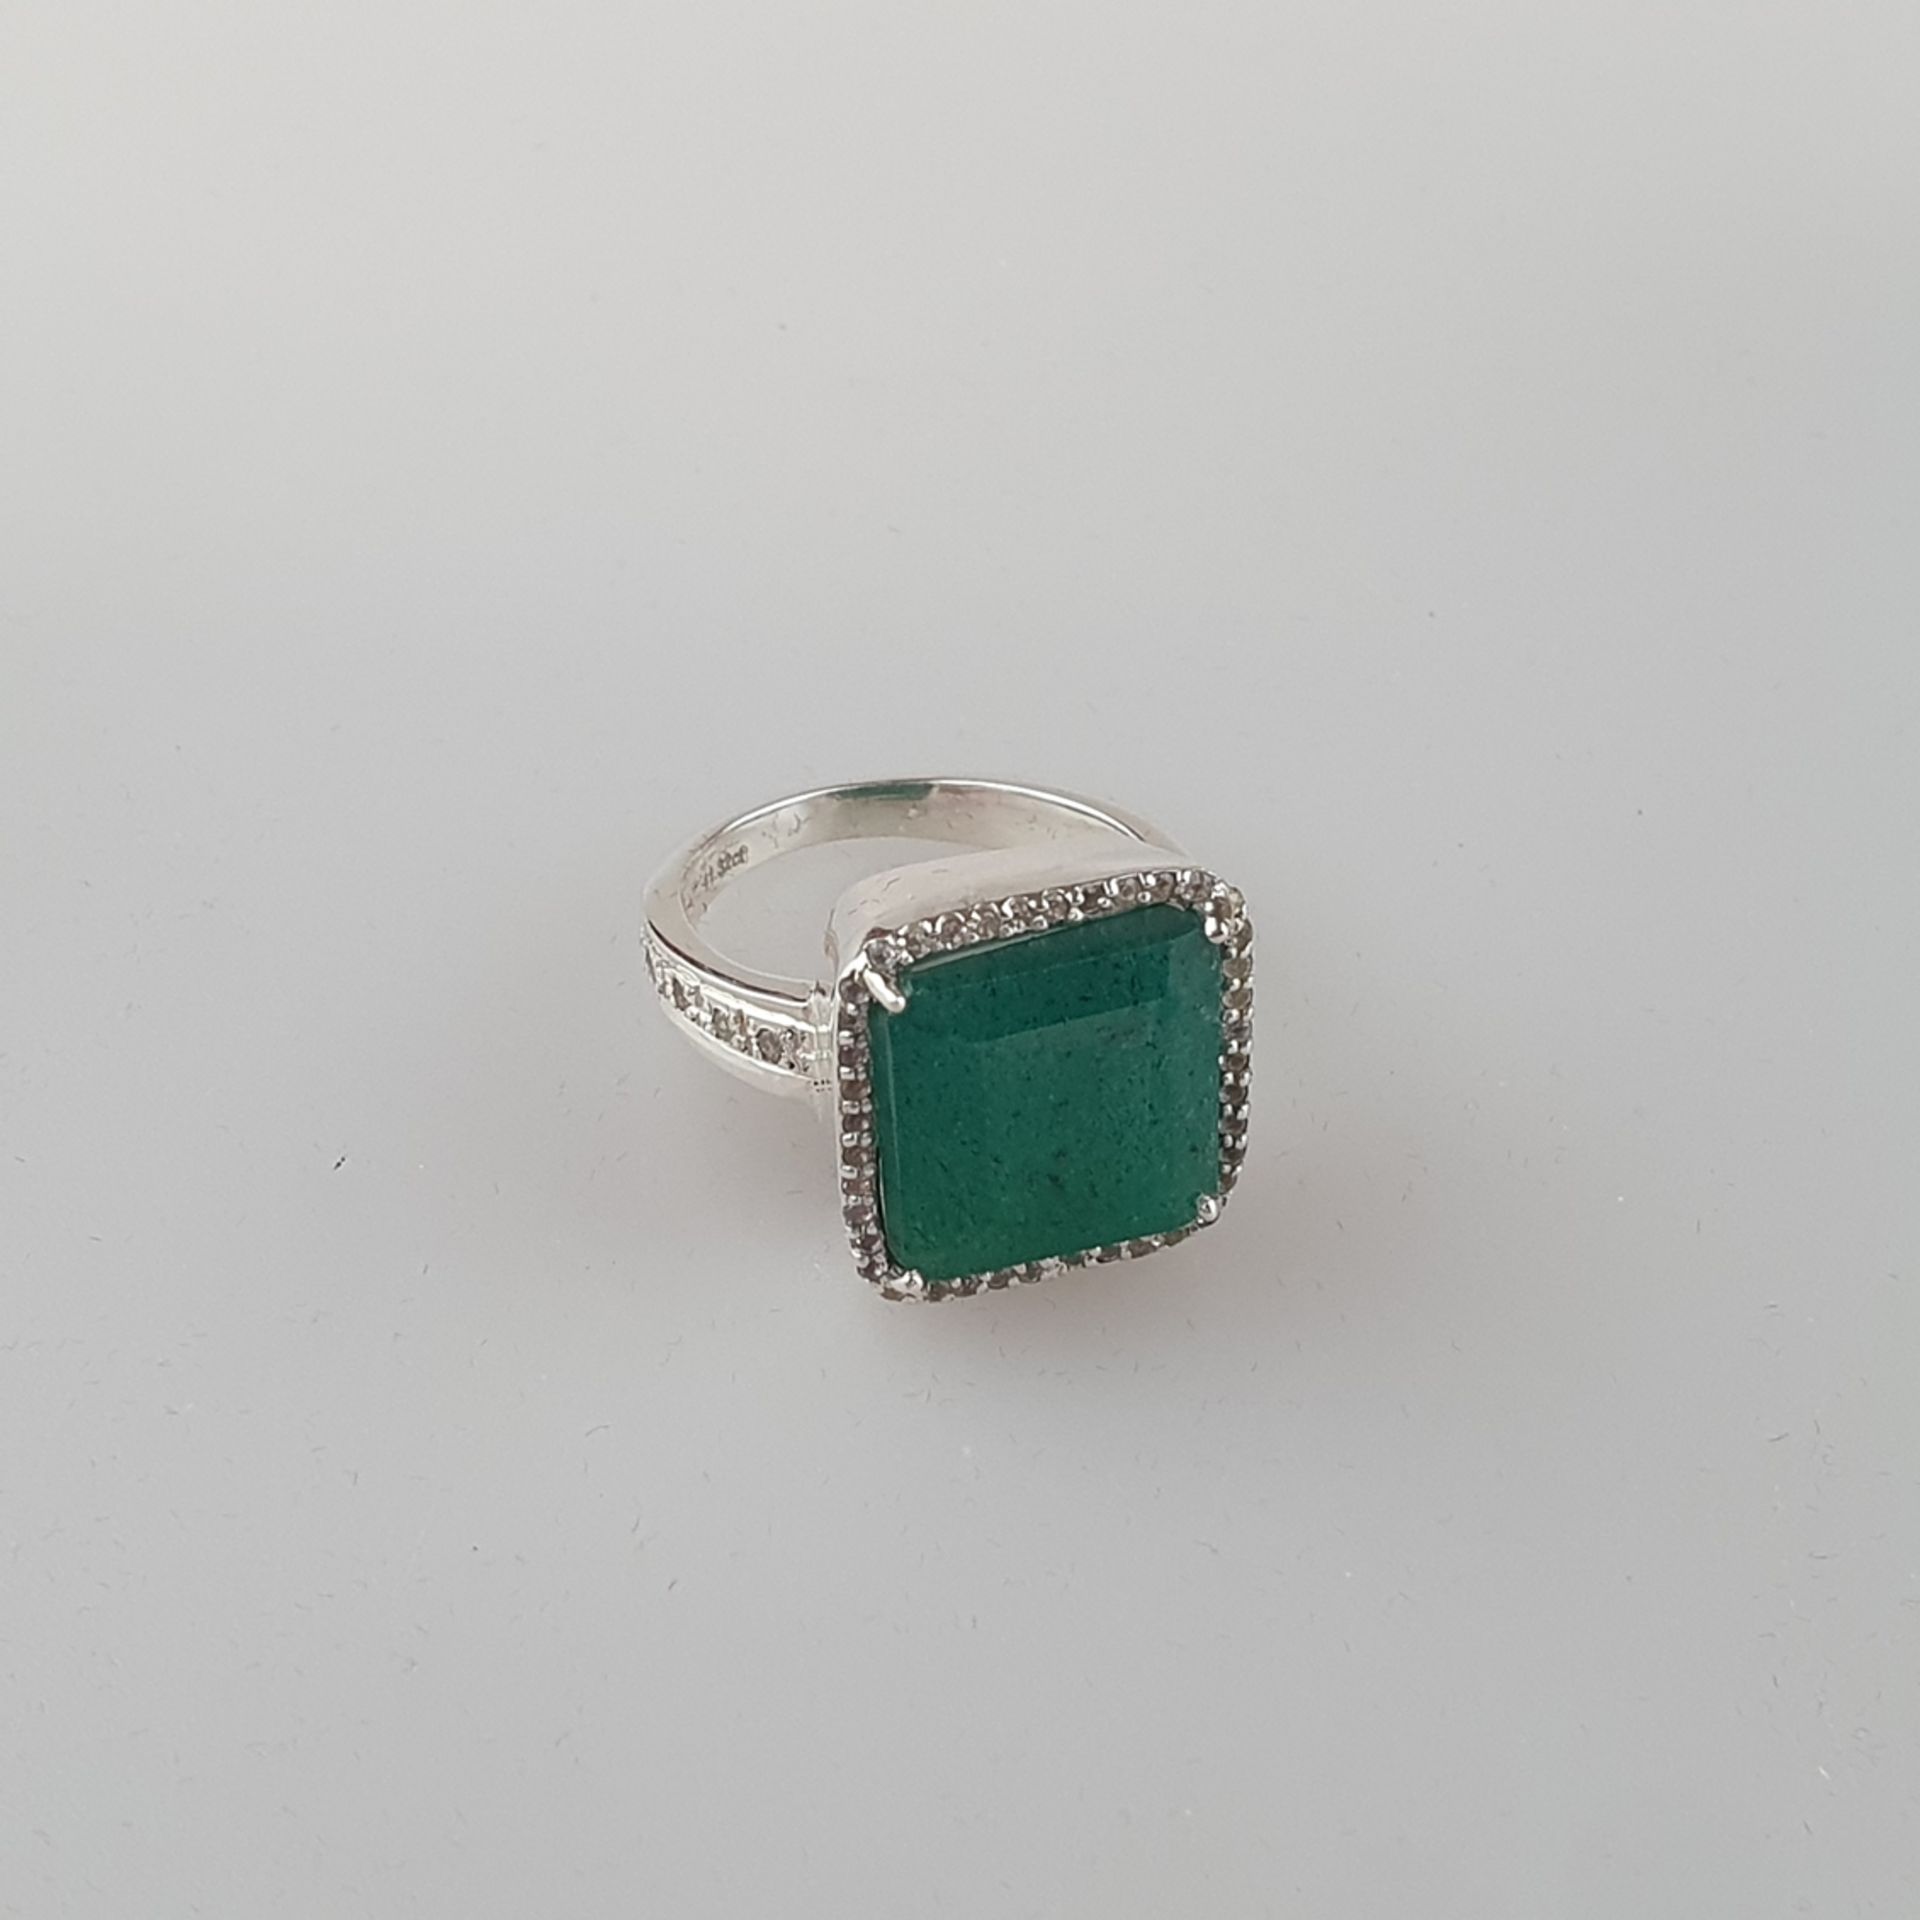 Silberring mit Smaragd - Sterling Silber, gestempelt, rechteckiger Ringkopf besetzt mit Smaragd im - Image 3 of 9